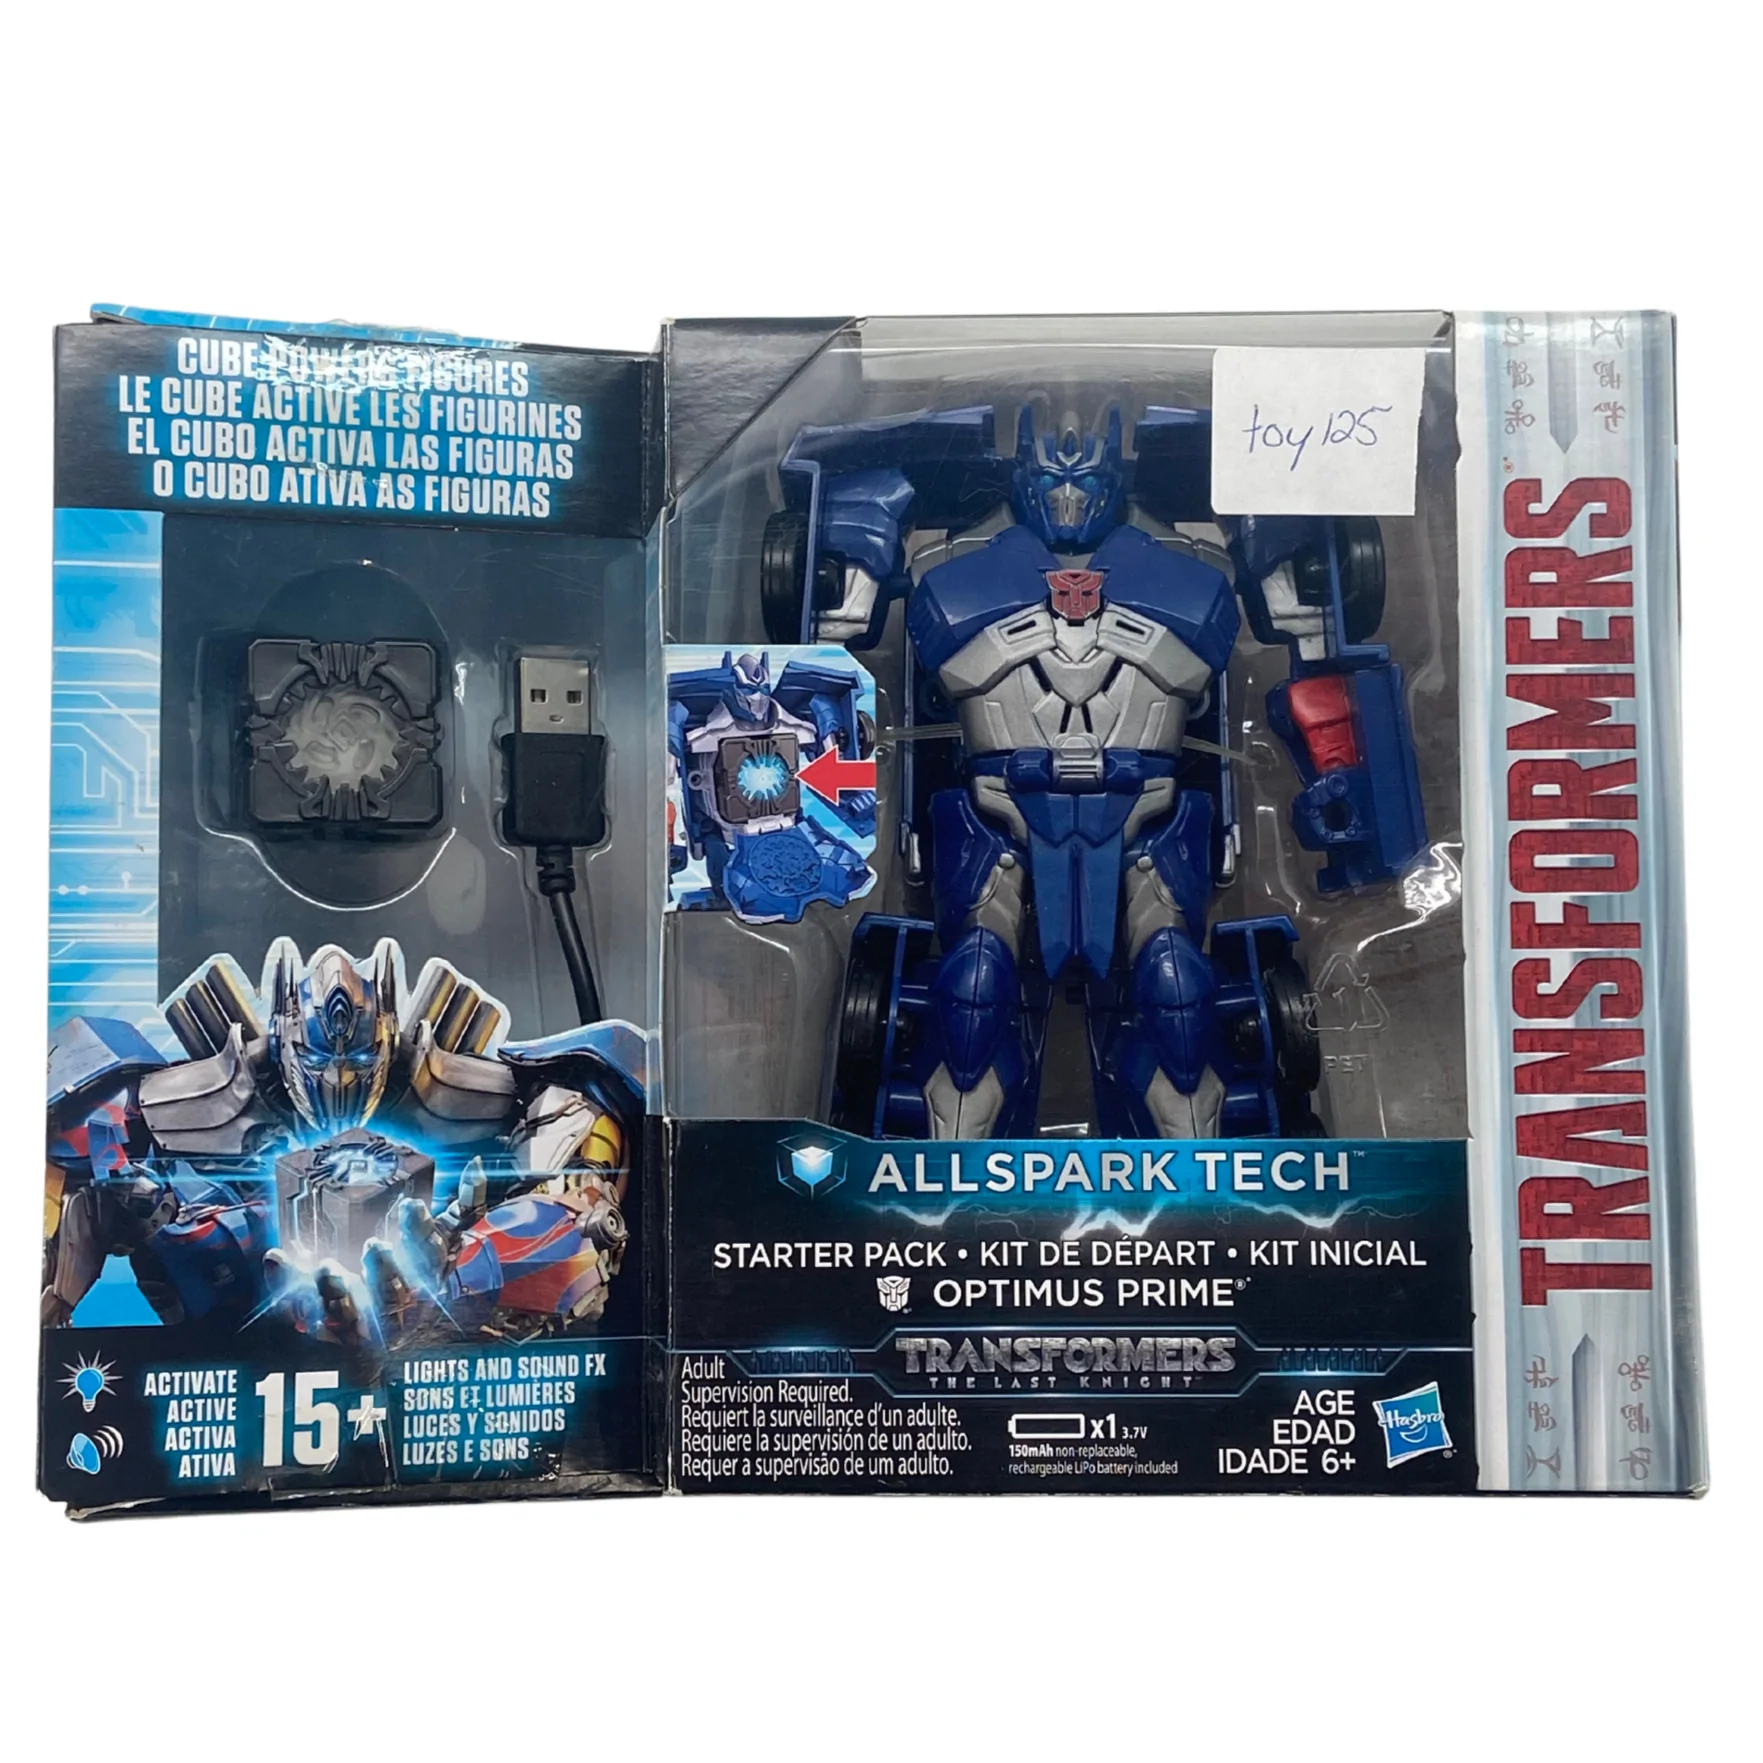 Transformers: Allspark Tech / Starter Pack / Lights Up / Sounds/ Action figure **DEALS**